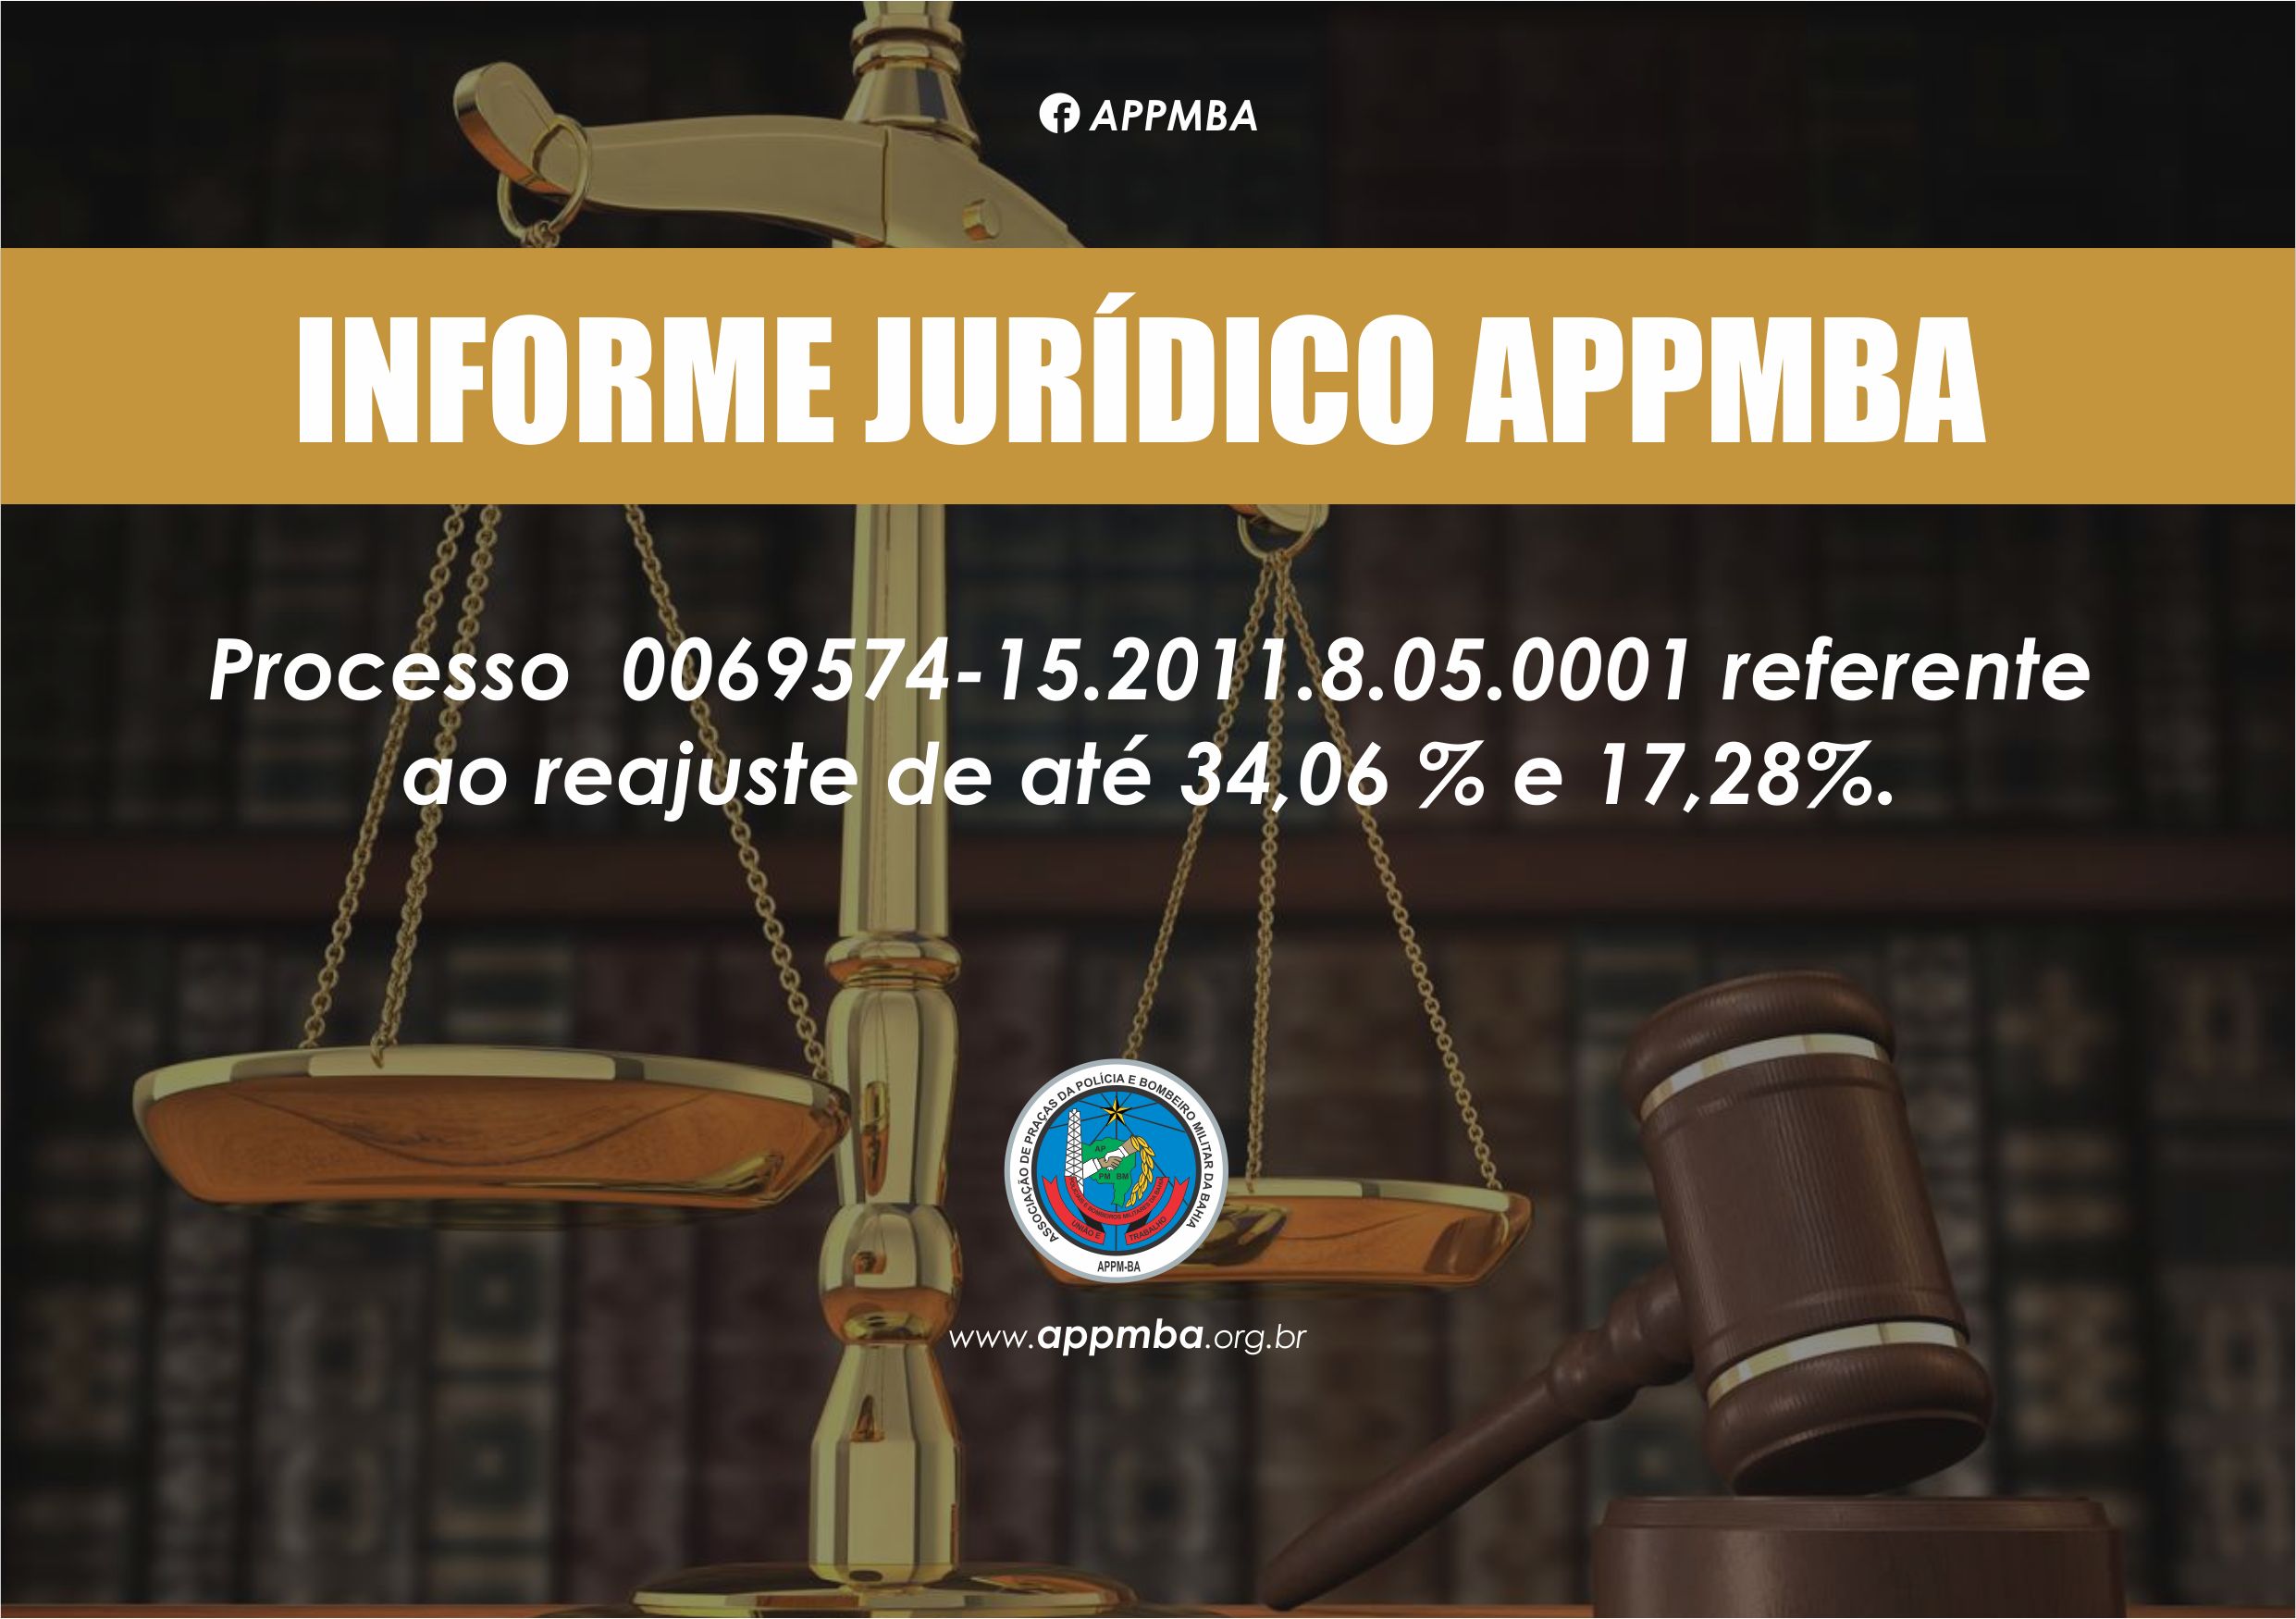 Informe Jurídico - Processo 0069574-15.2011.8.05.0001